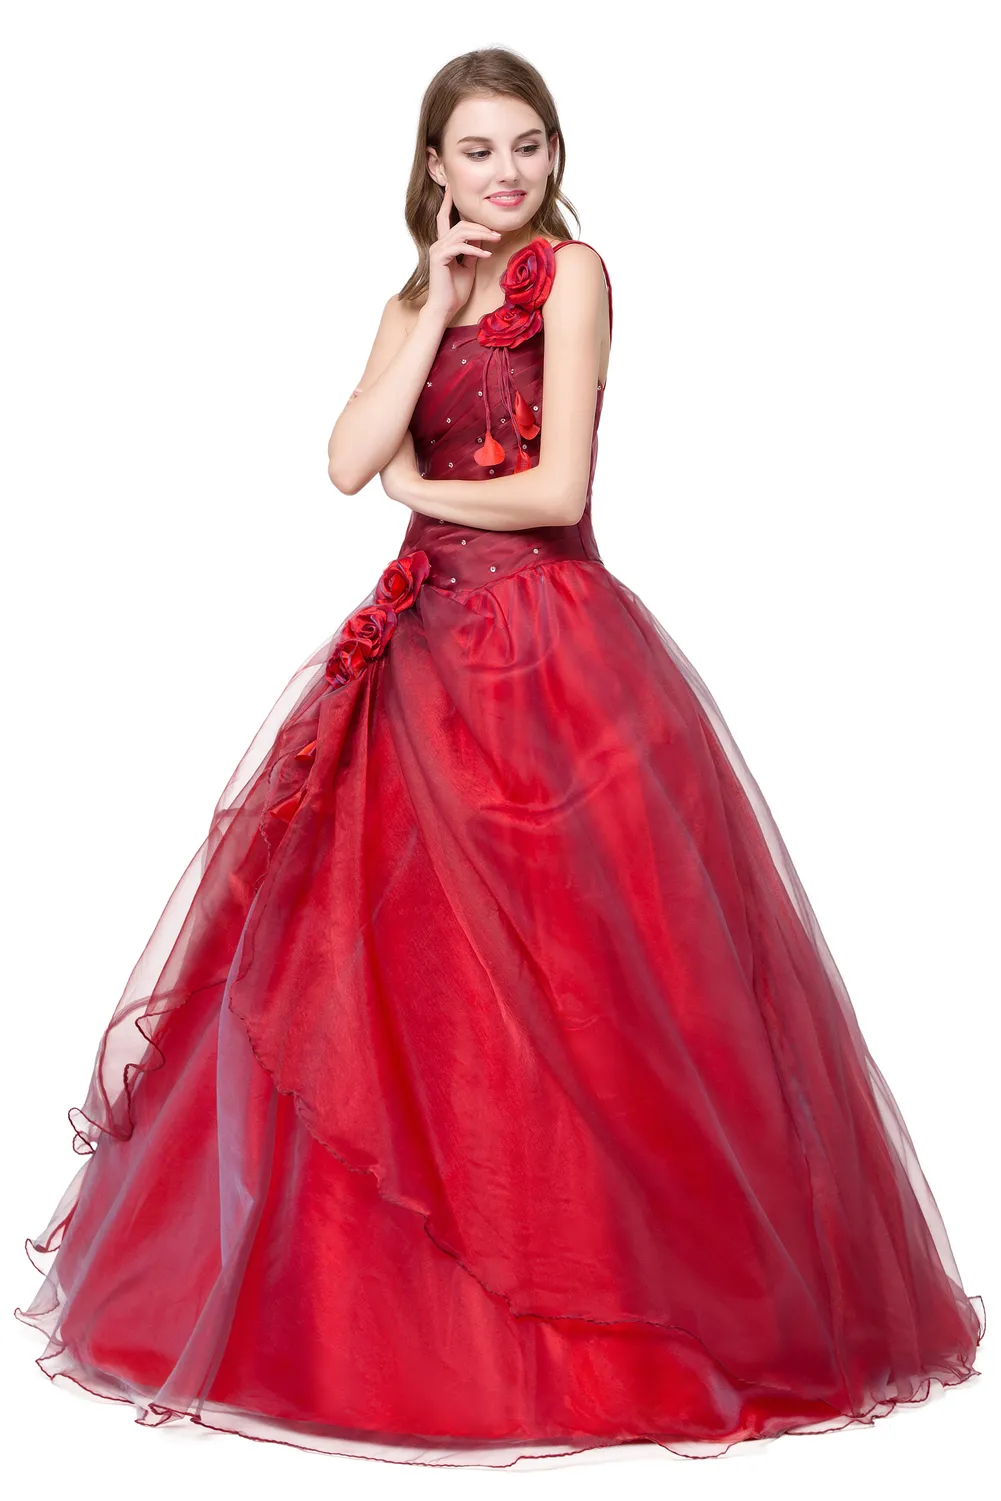 Red Quinceanera jurken goedkoop 2017 Sweet 16 tieners ball jurk debutante maskerade prom jurken goedkoop real po one schouder formal1168728